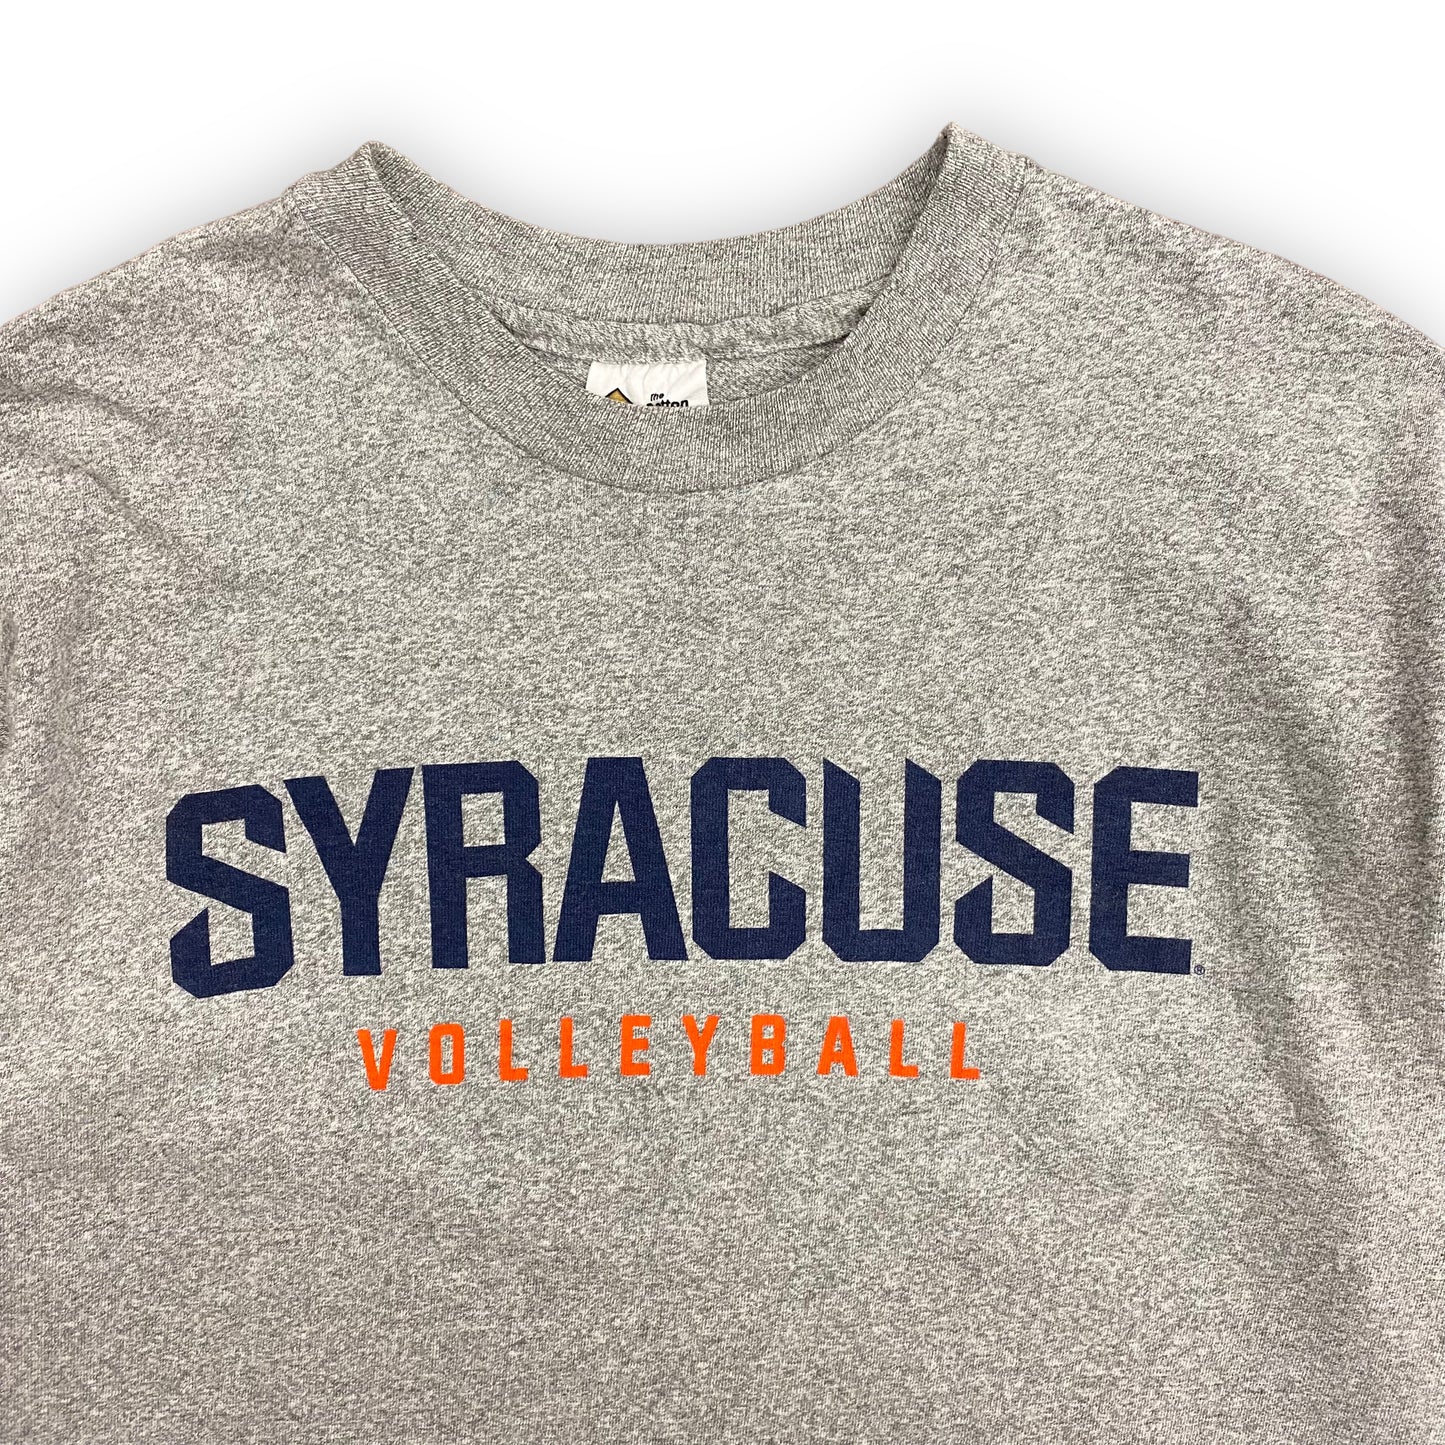 Vintage 1990s Syracuse University Volleyball Single Stitch Tee - Size Large